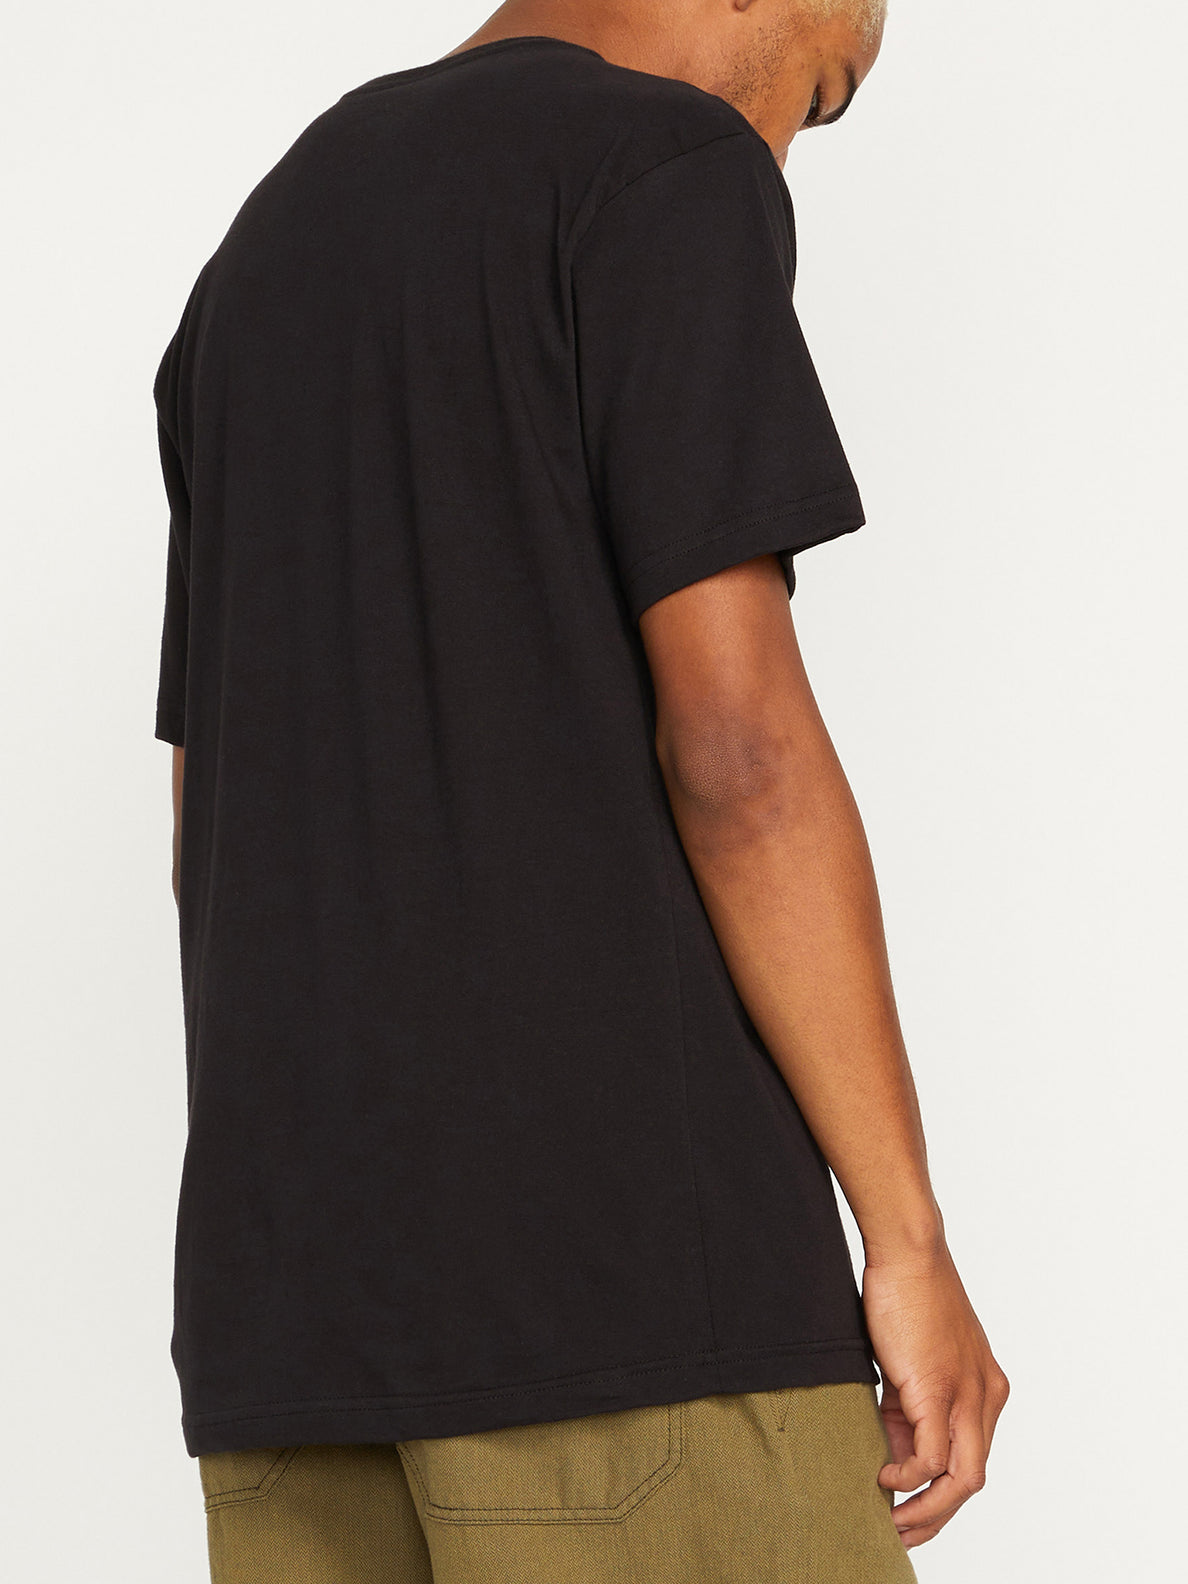 Forty Ouncer Short Sleeve Shirt - Black (A3512307_BLK) [13]